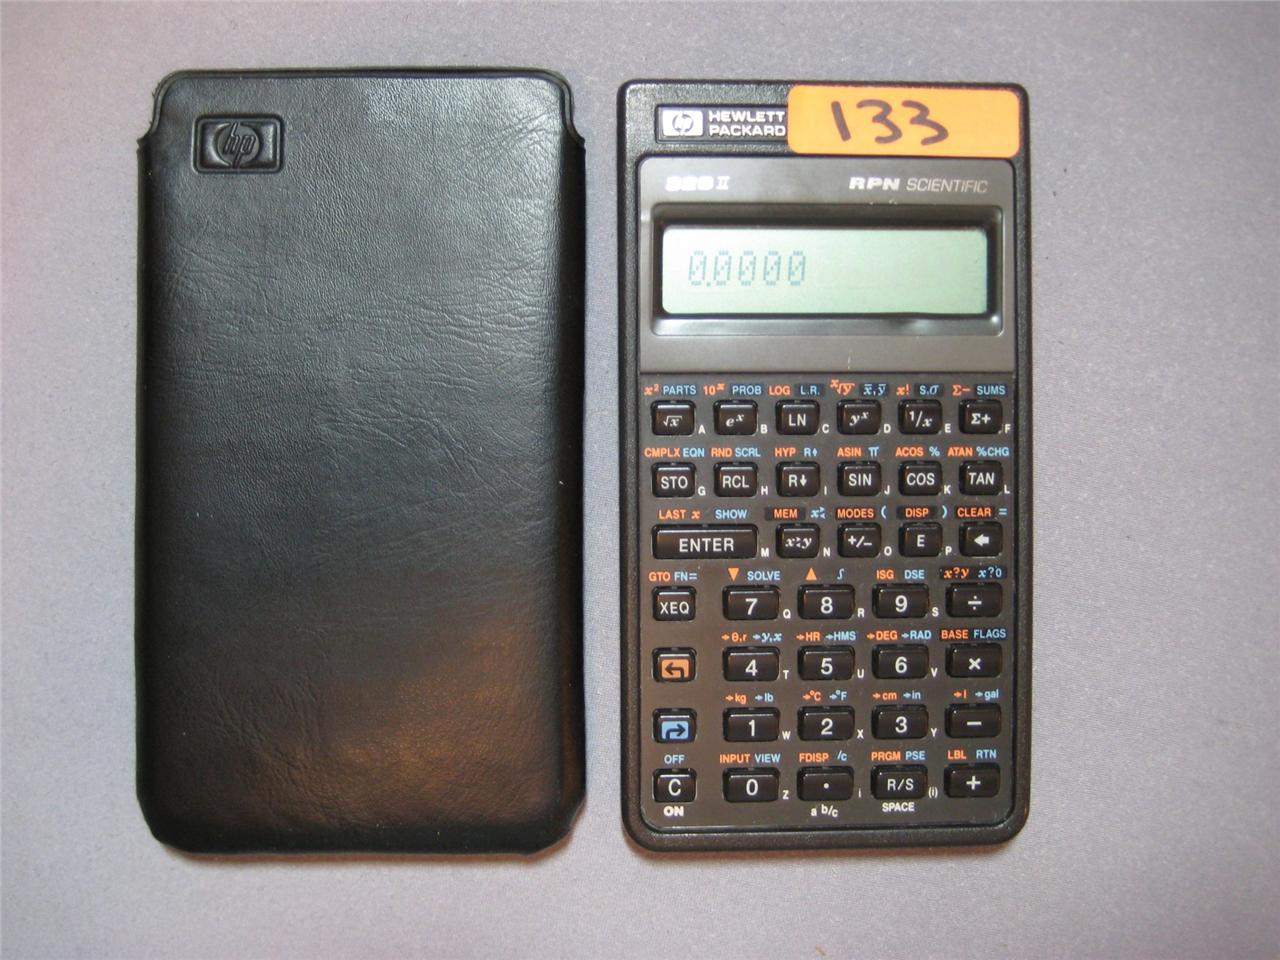 hp rpn scientific calculators